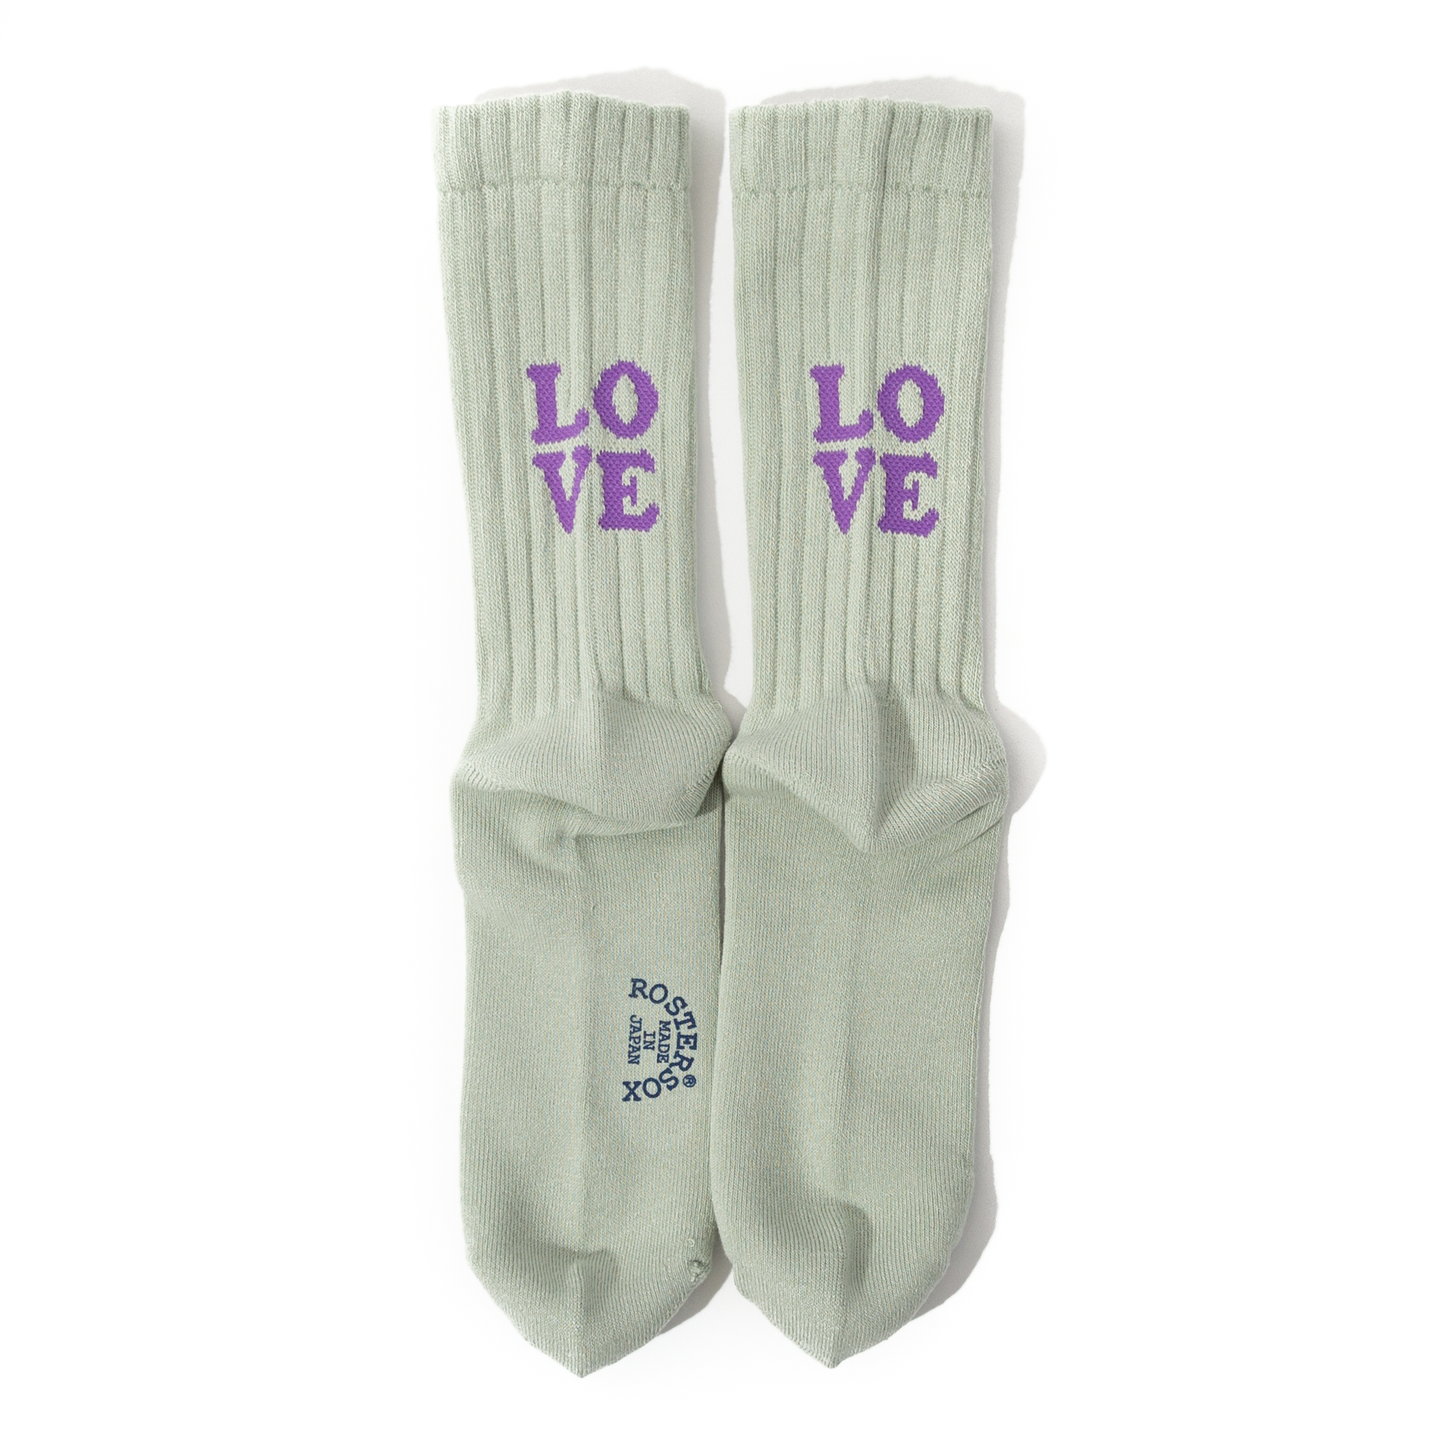 Rostersox Love Sock